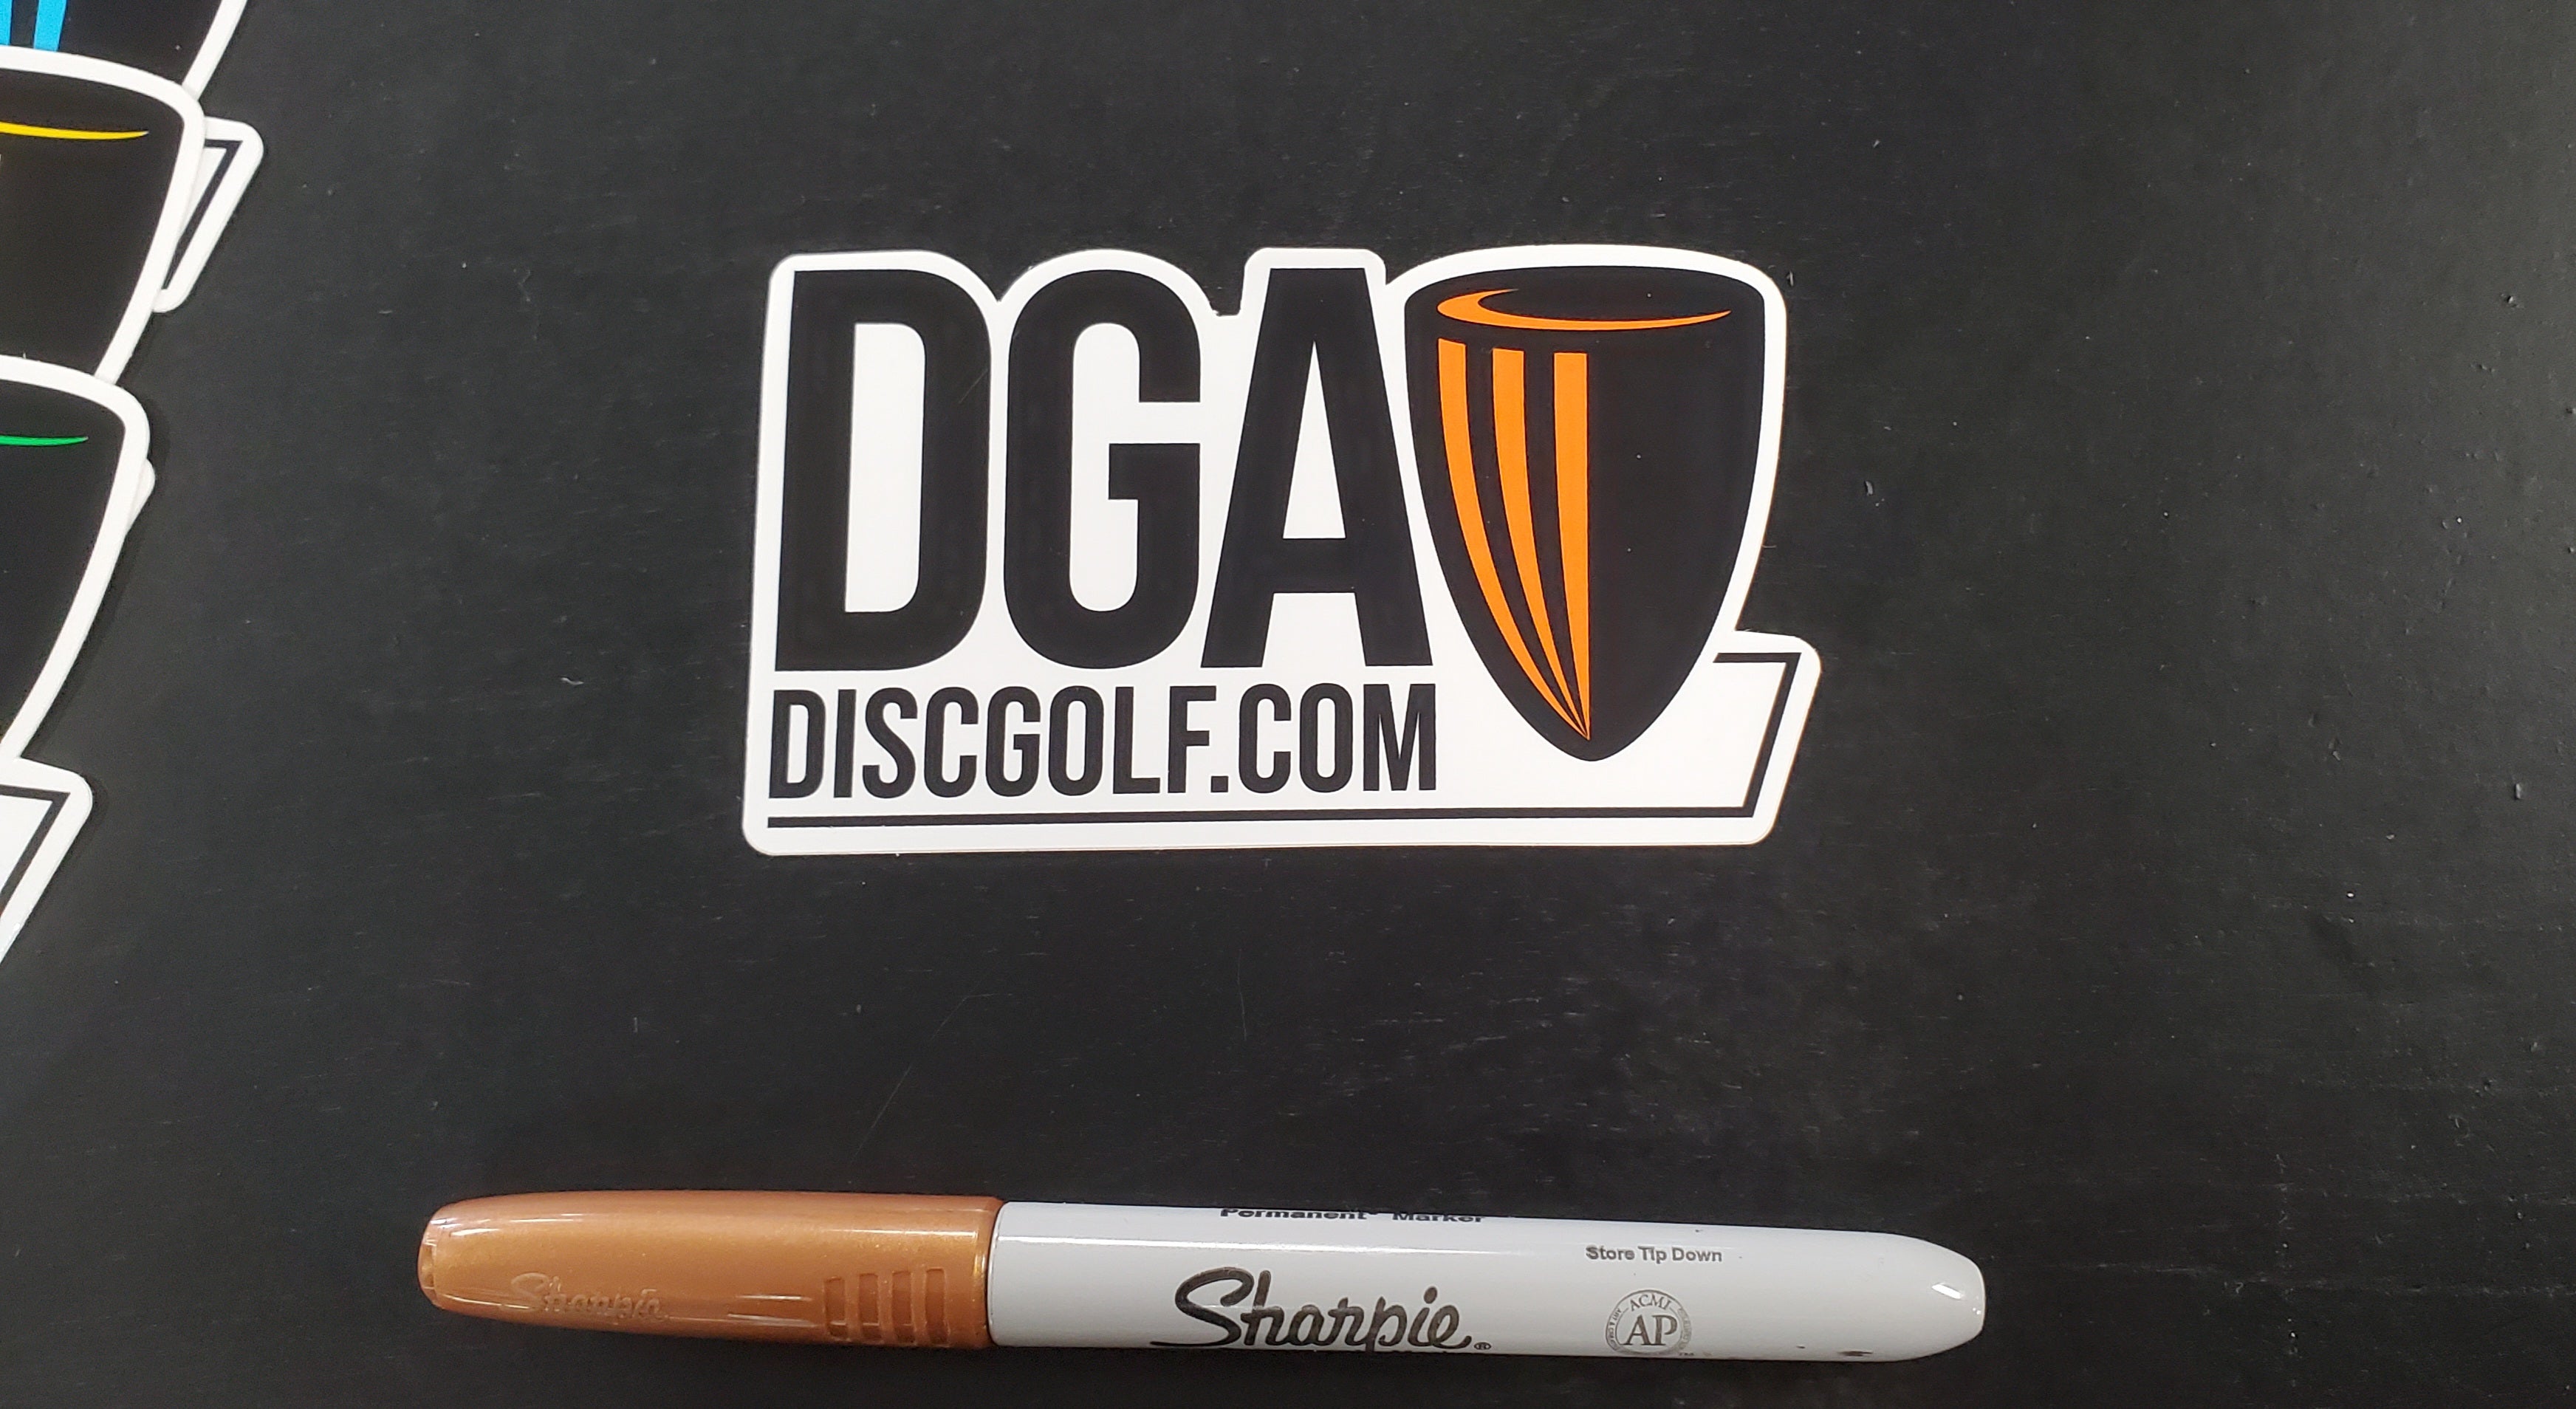 DGA Vinyl Sticker